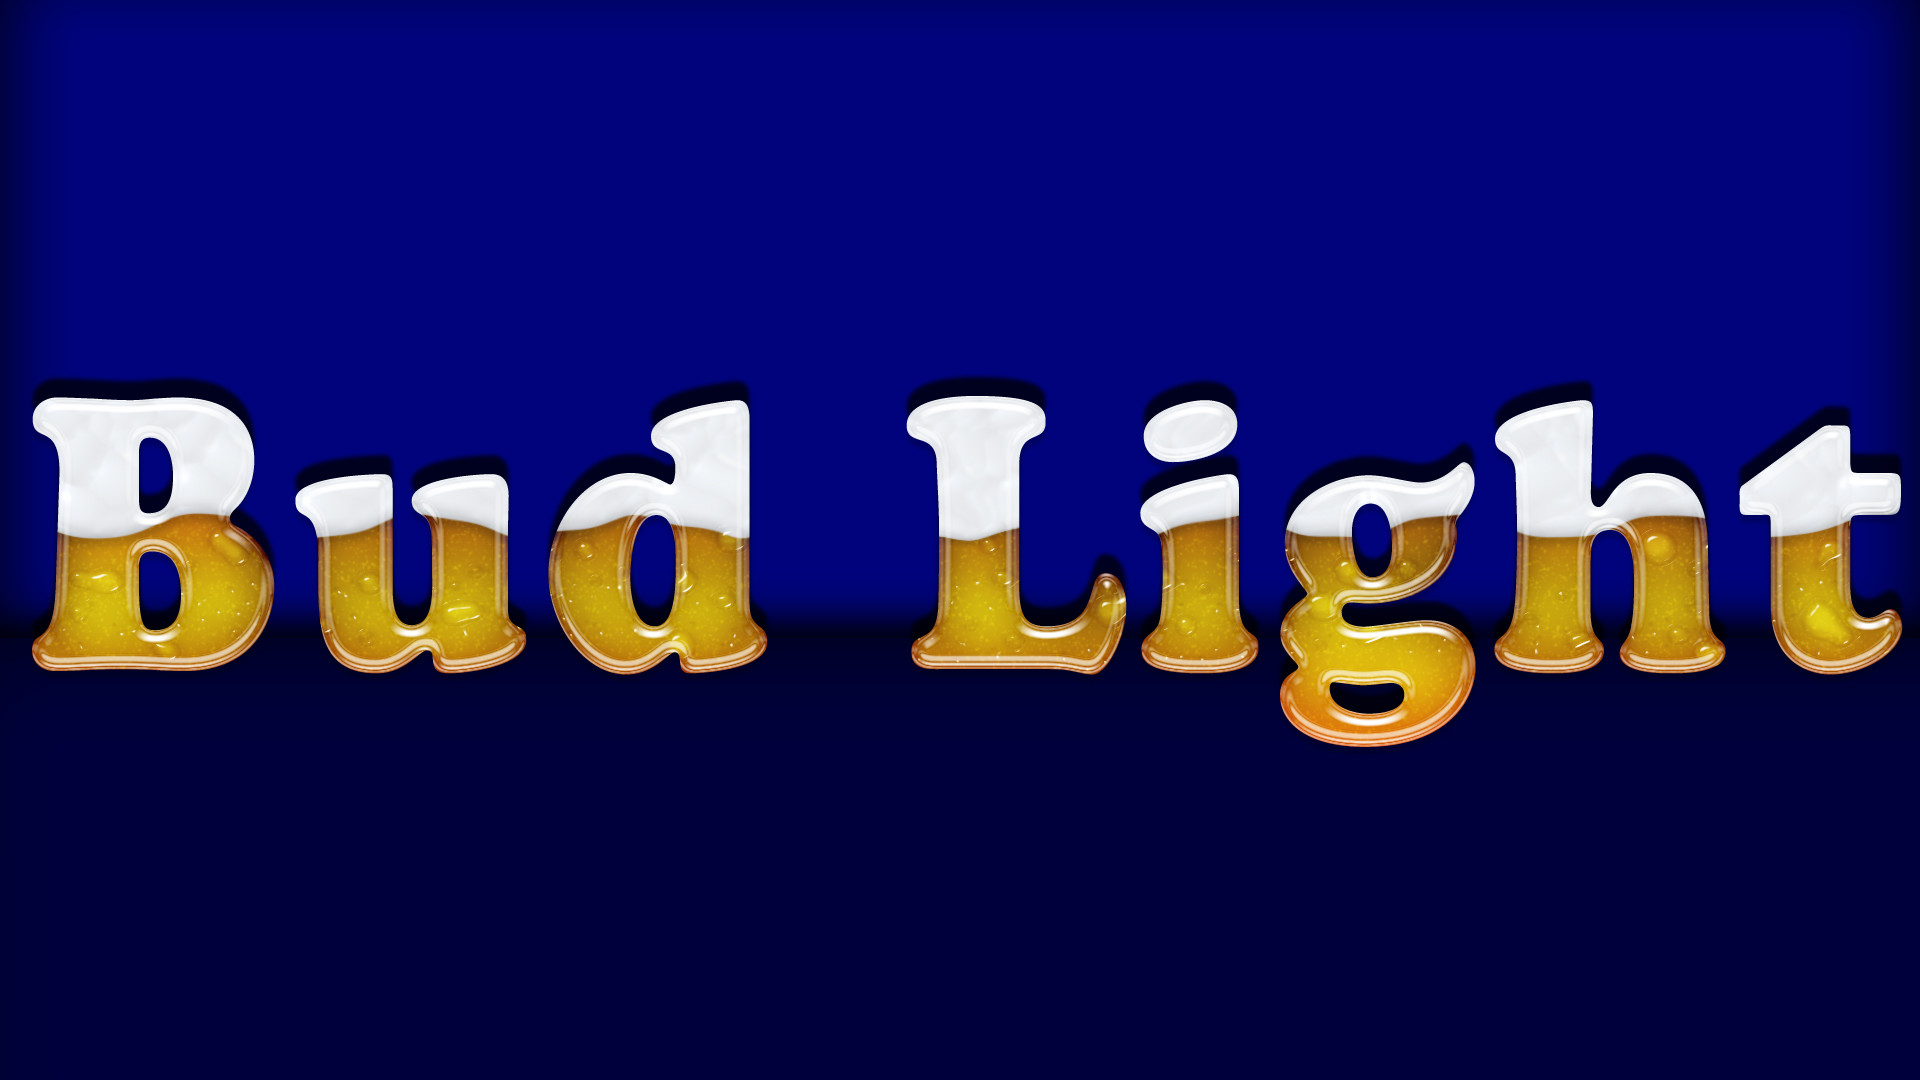 1920x1080 Bud Light by ChronicGaming-inc on DeviantArt